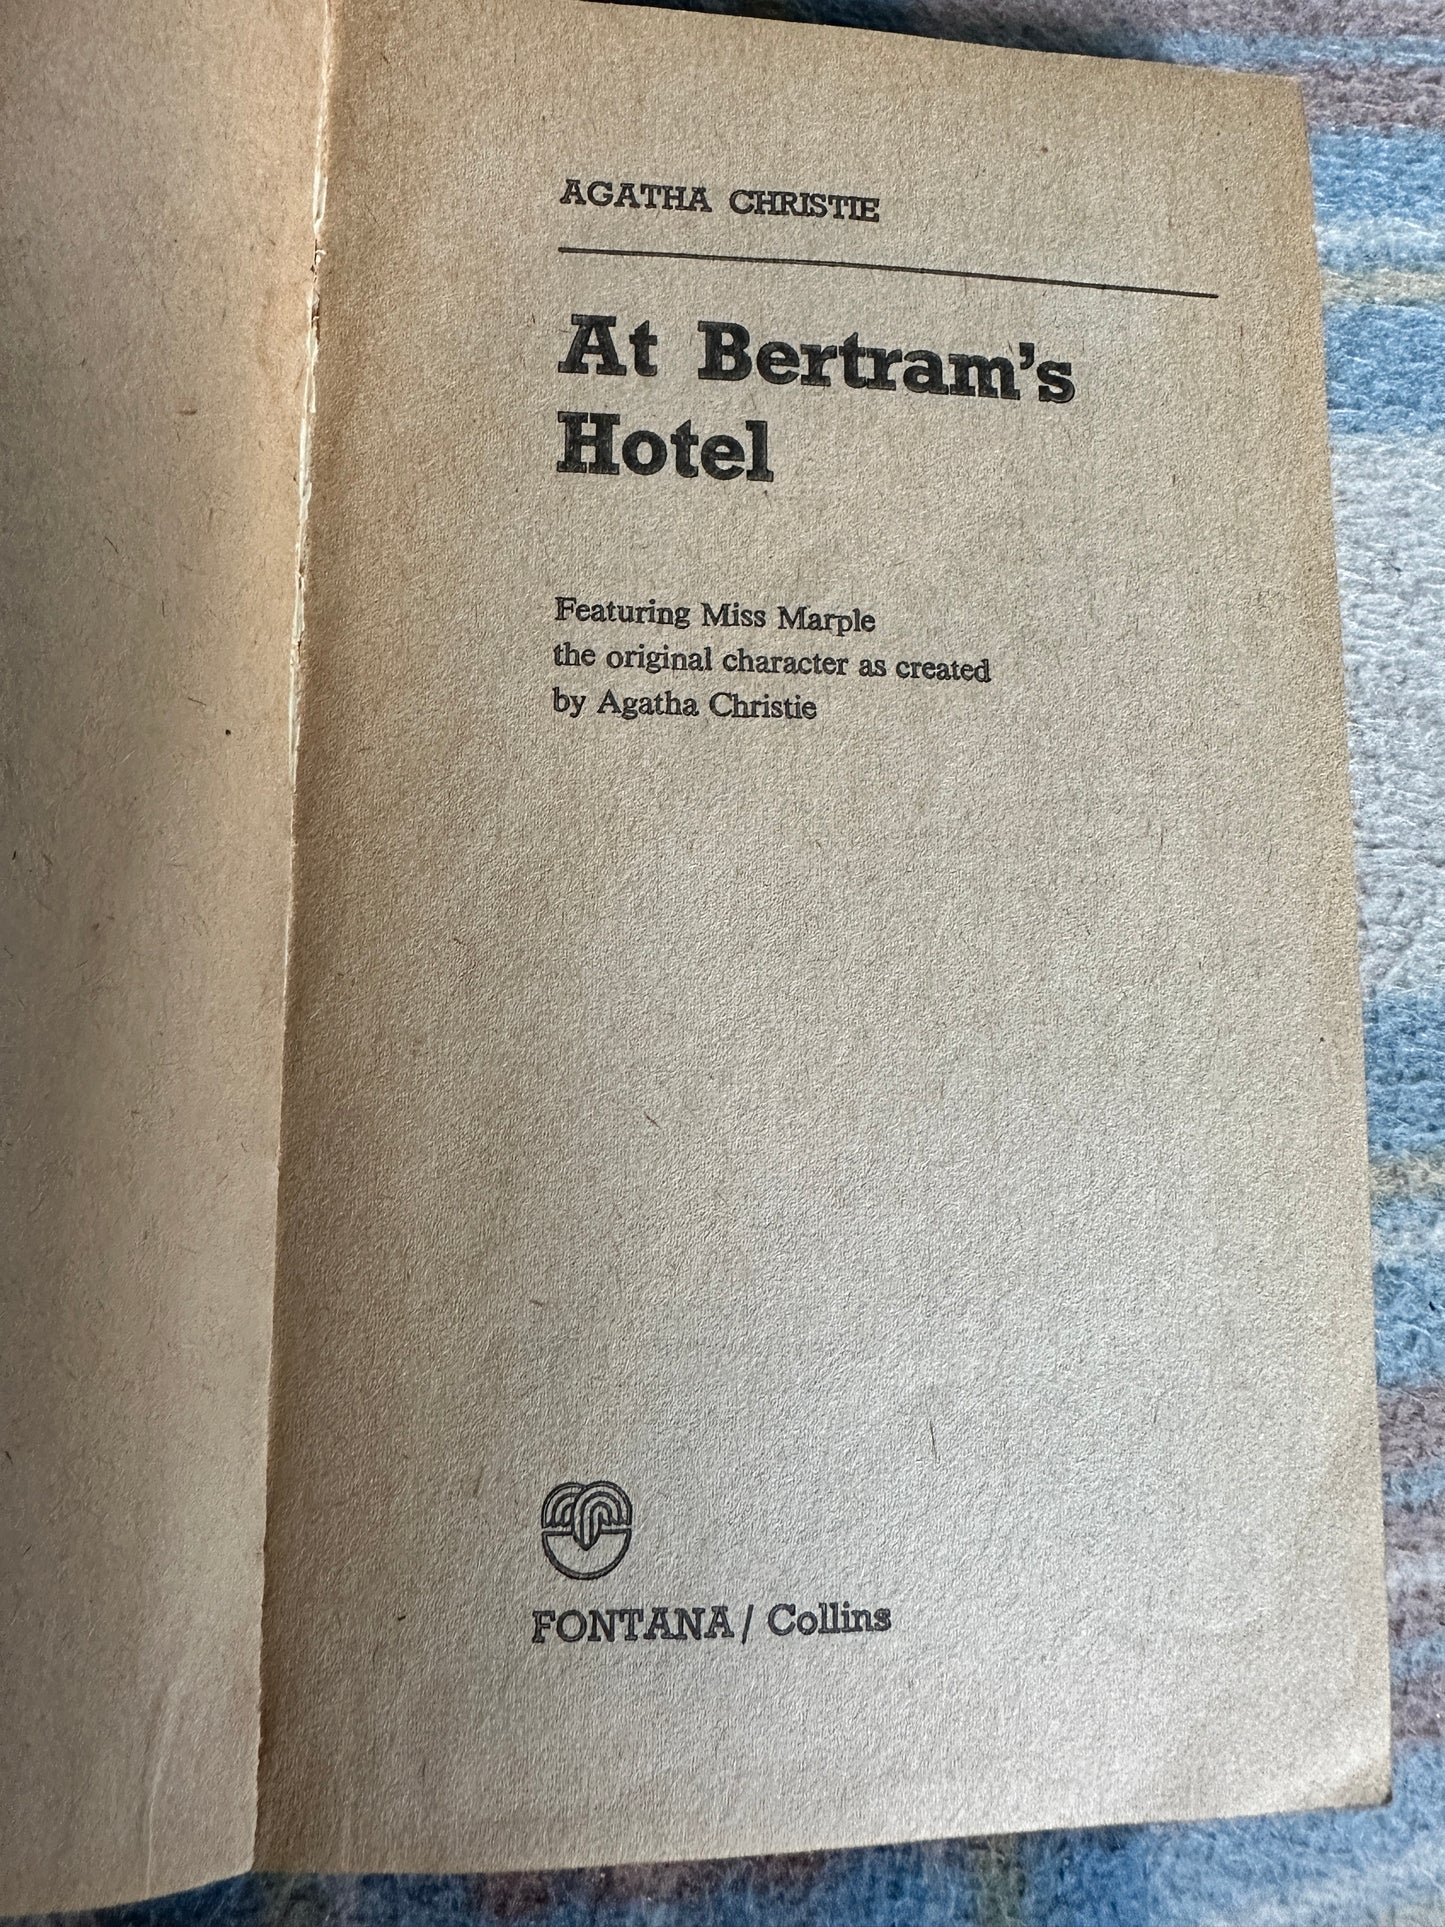 1976 At Bertram’s Hotel - Agatha Christie(Fontana)